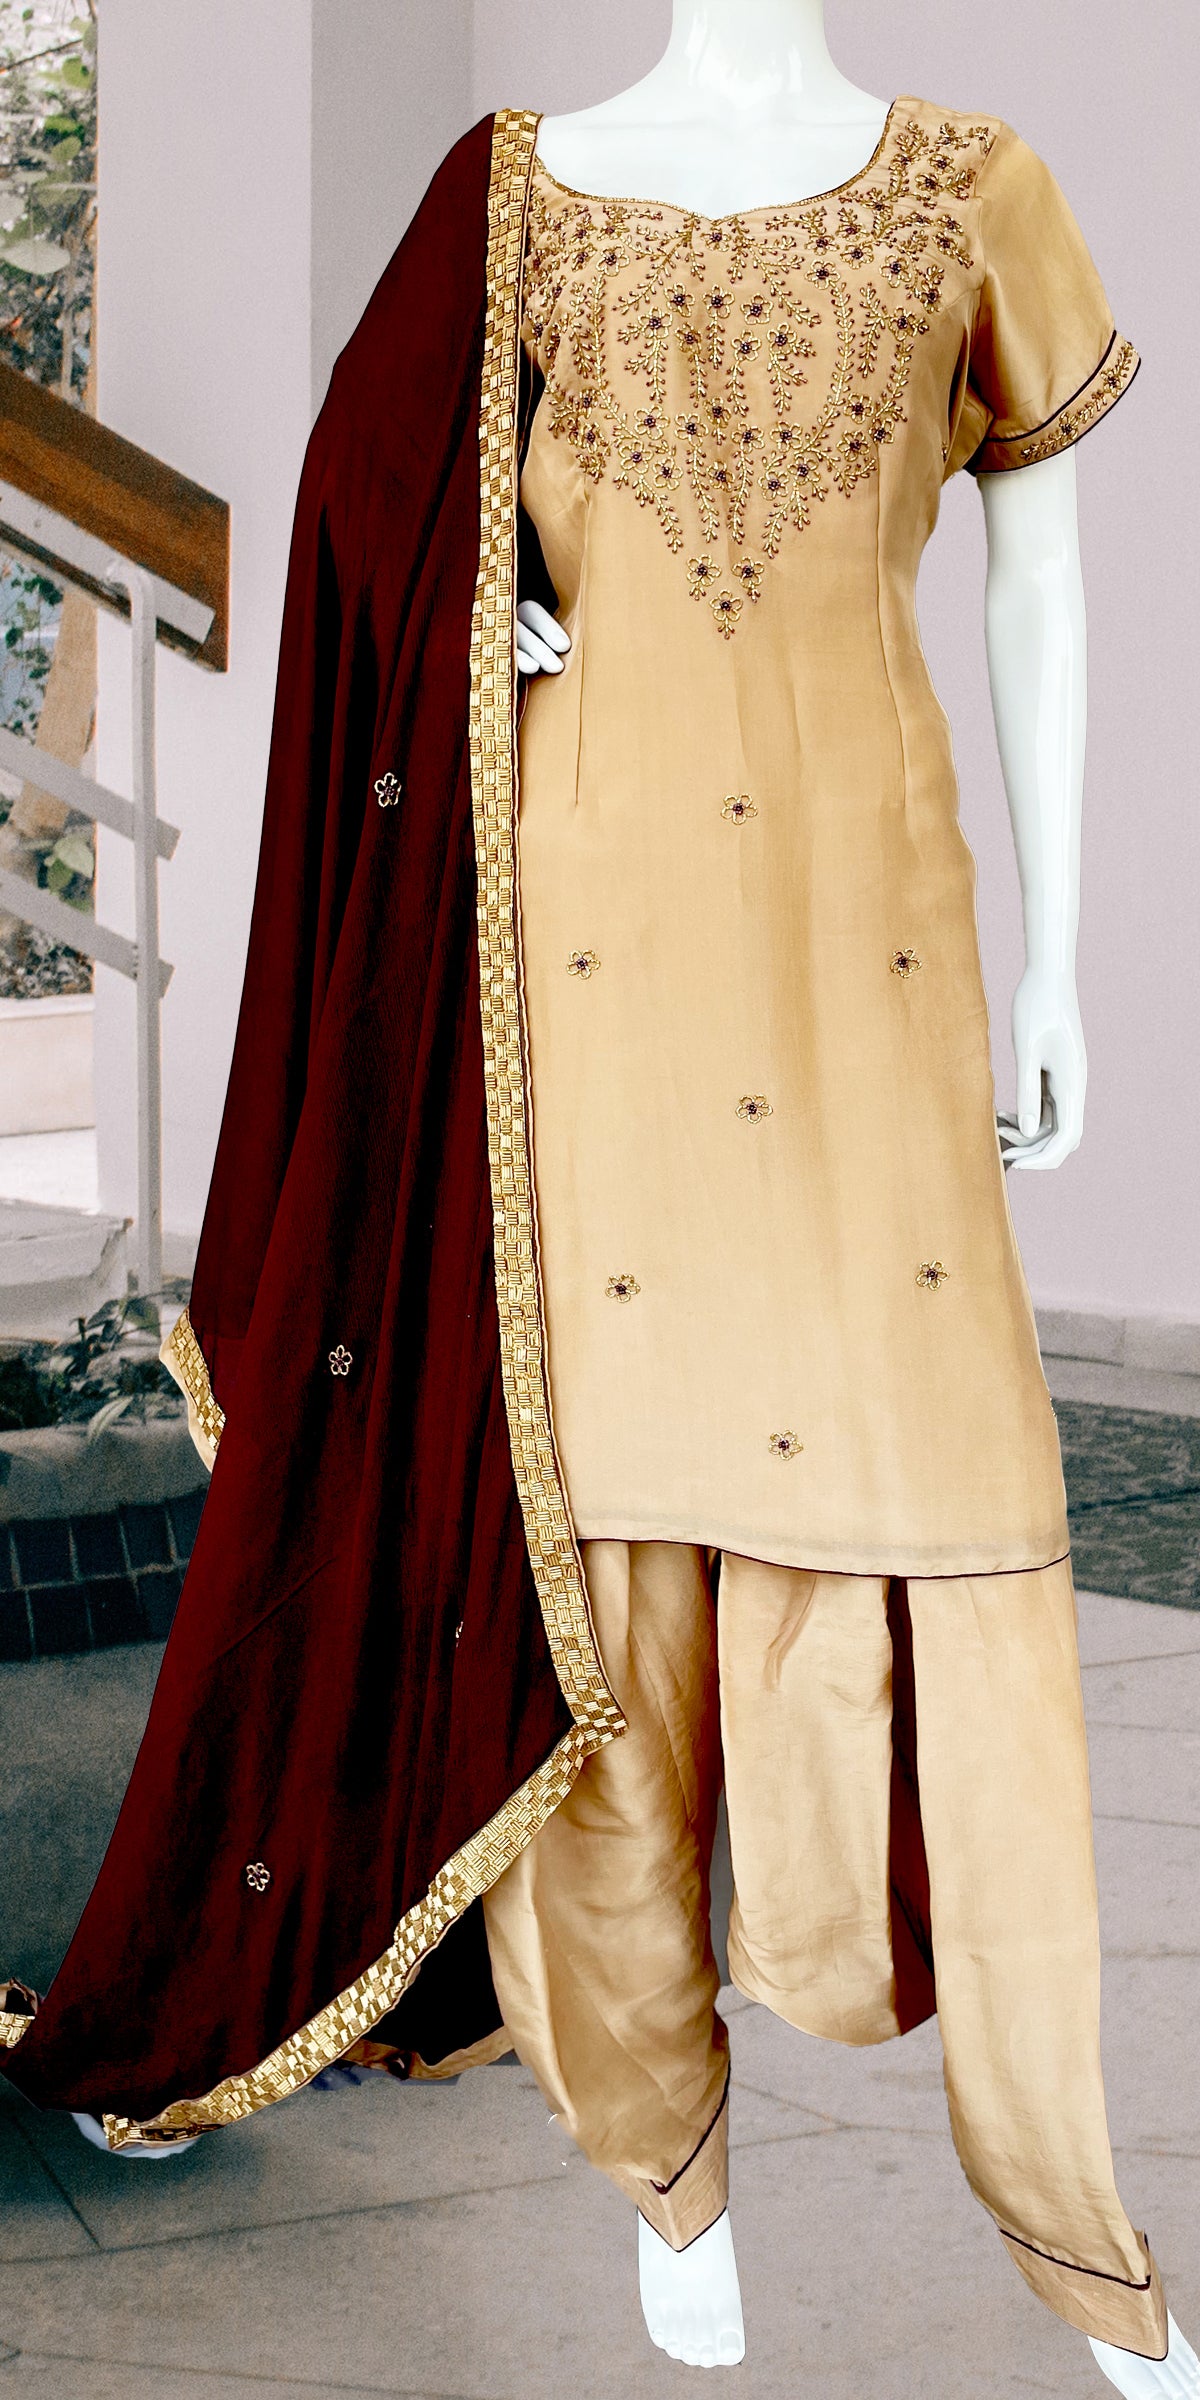 Beige Patiala Salwar Suit, Wine Patiala Salwar Suit, Indian Wedding wear, Hand Embroidered Salwar Suit, Indian Temple wear, India wear, South Asian wear, Maroon Dupatta Suit, Punjabi Salwar Suit.